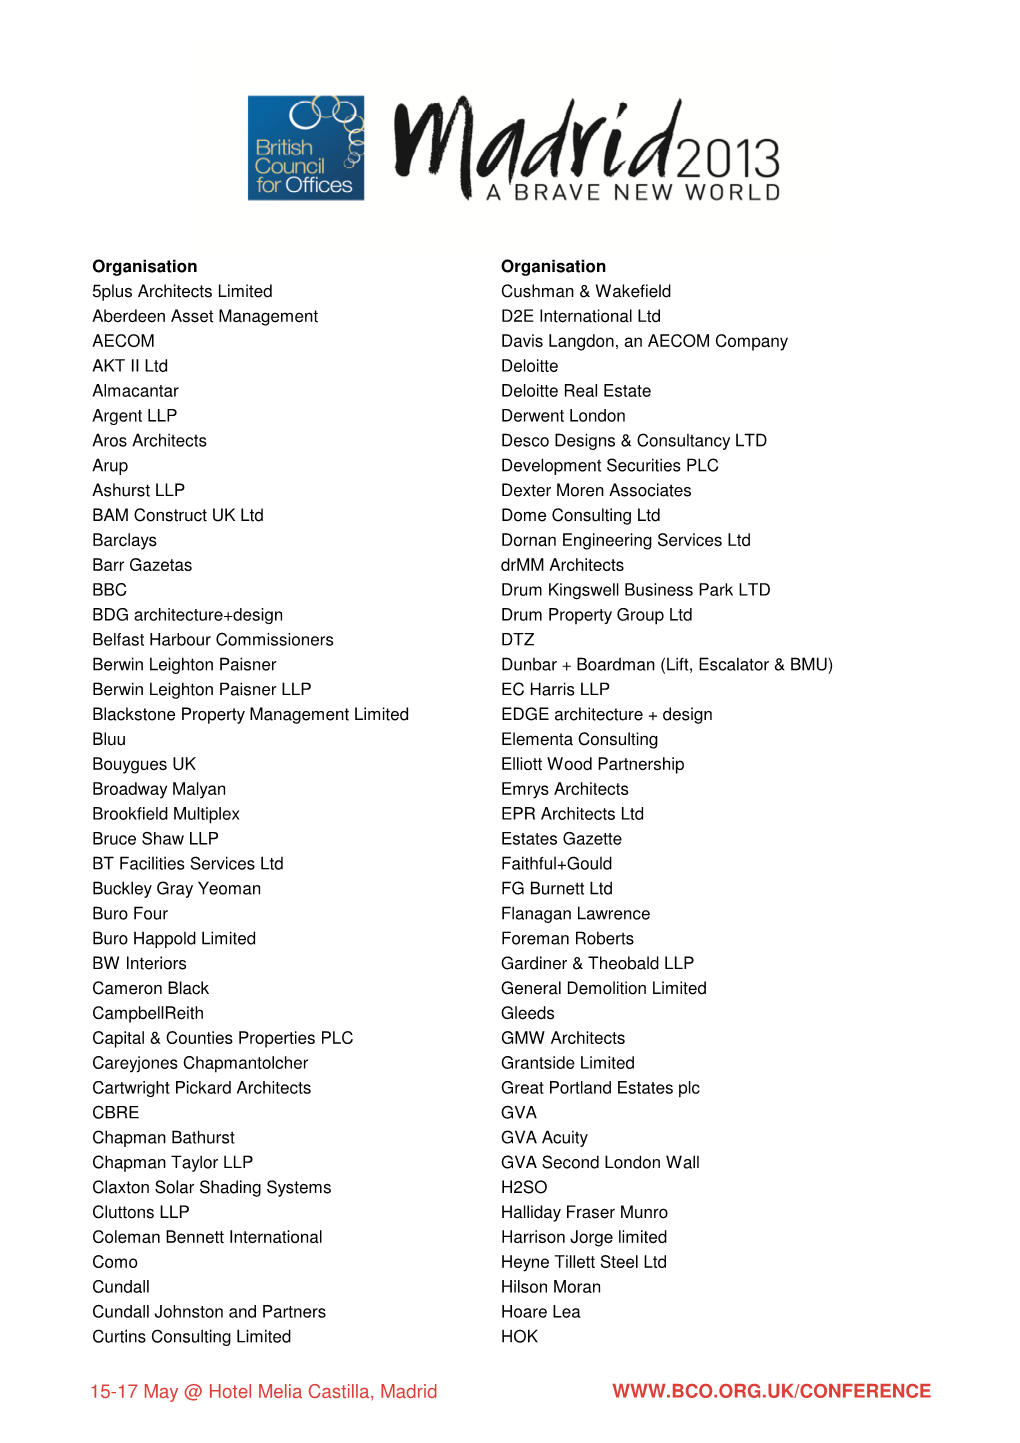 List of Companies in Attendance.Xlsx